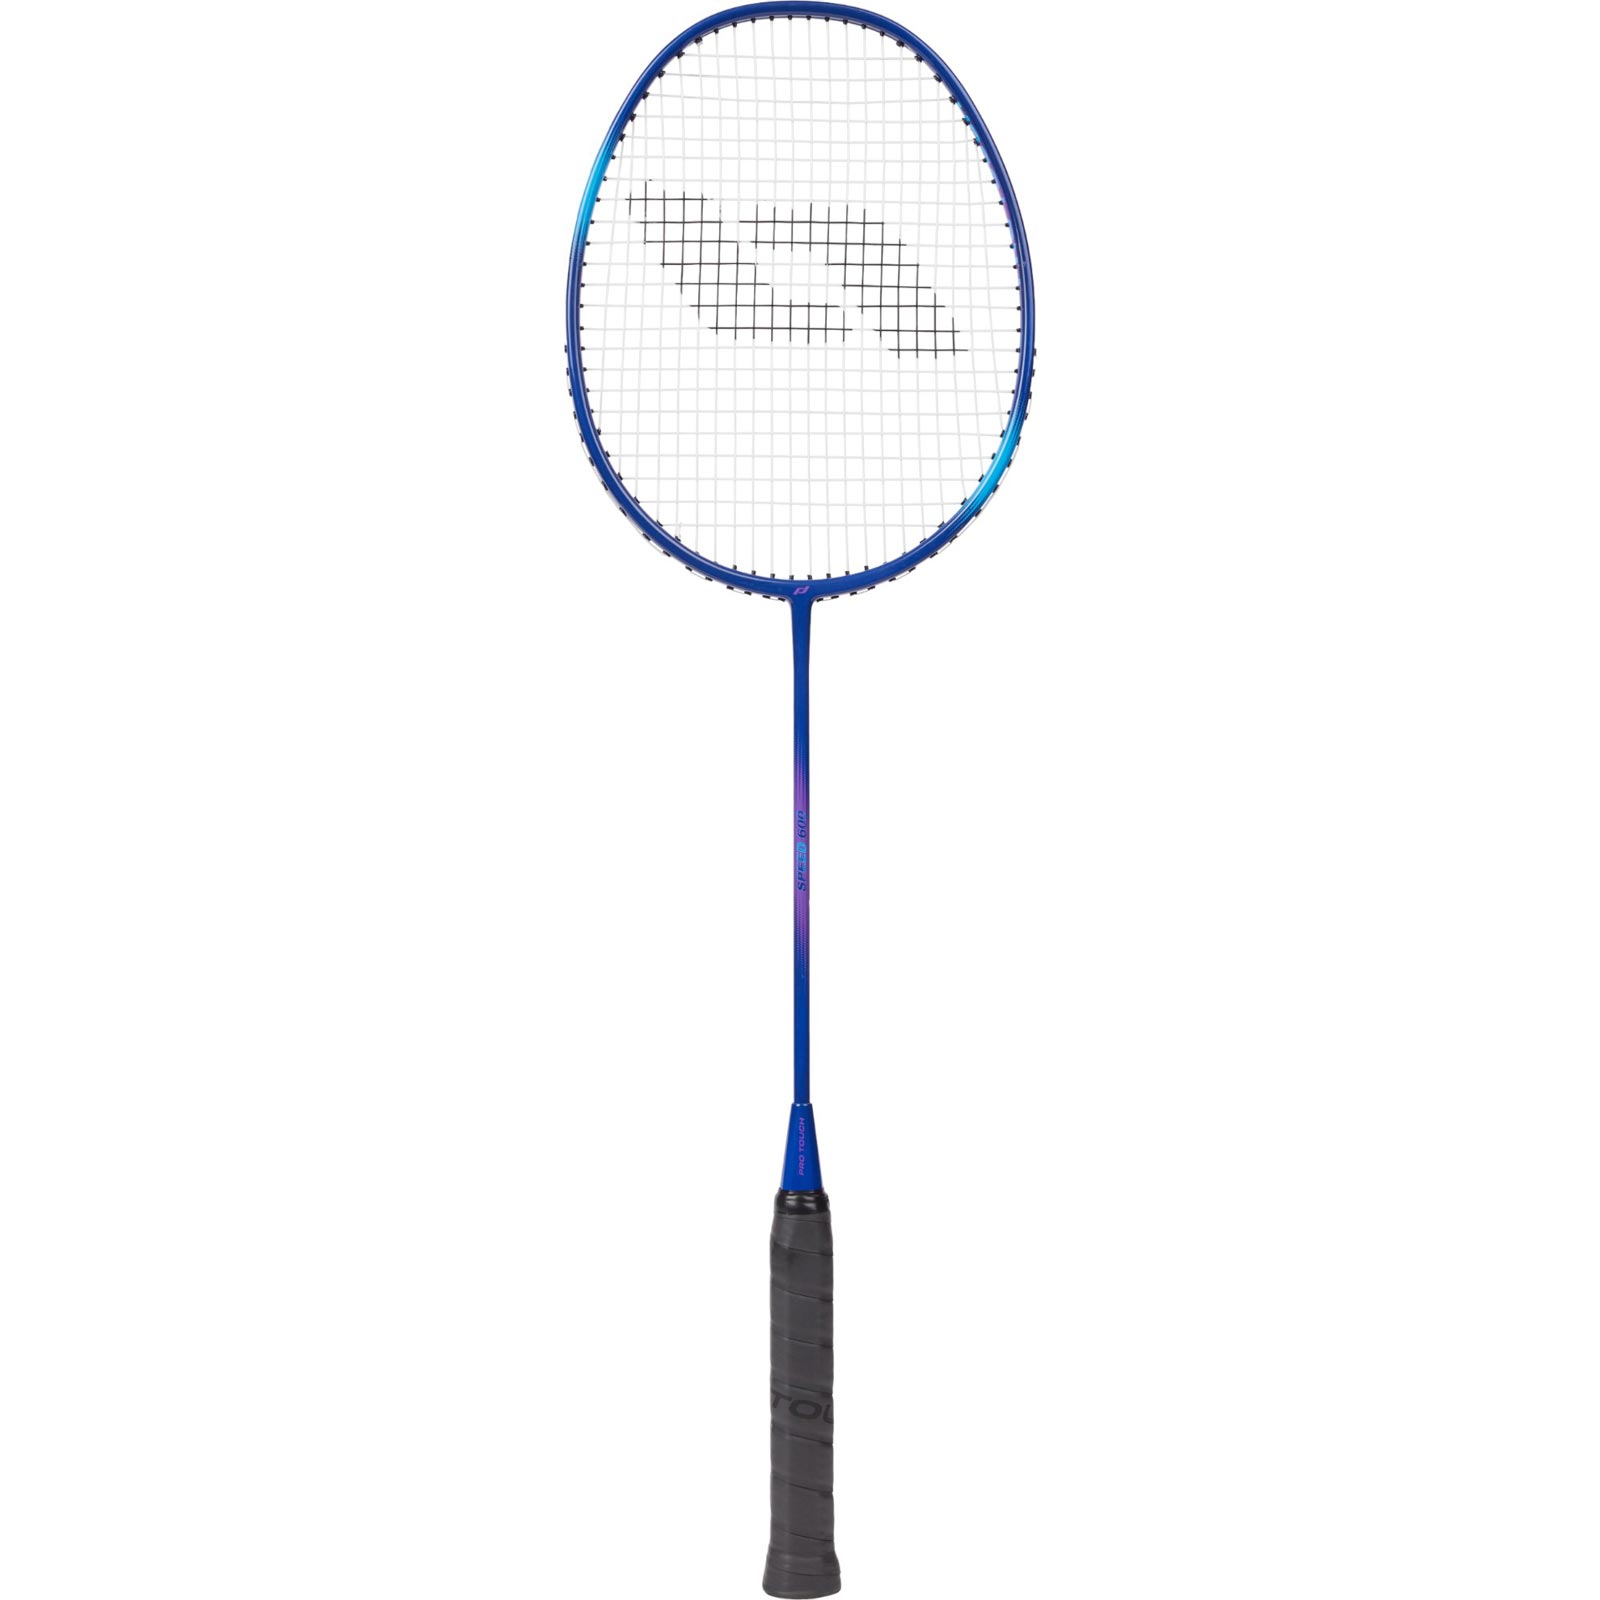 Pro Touch Speed 600 Badminton Racket